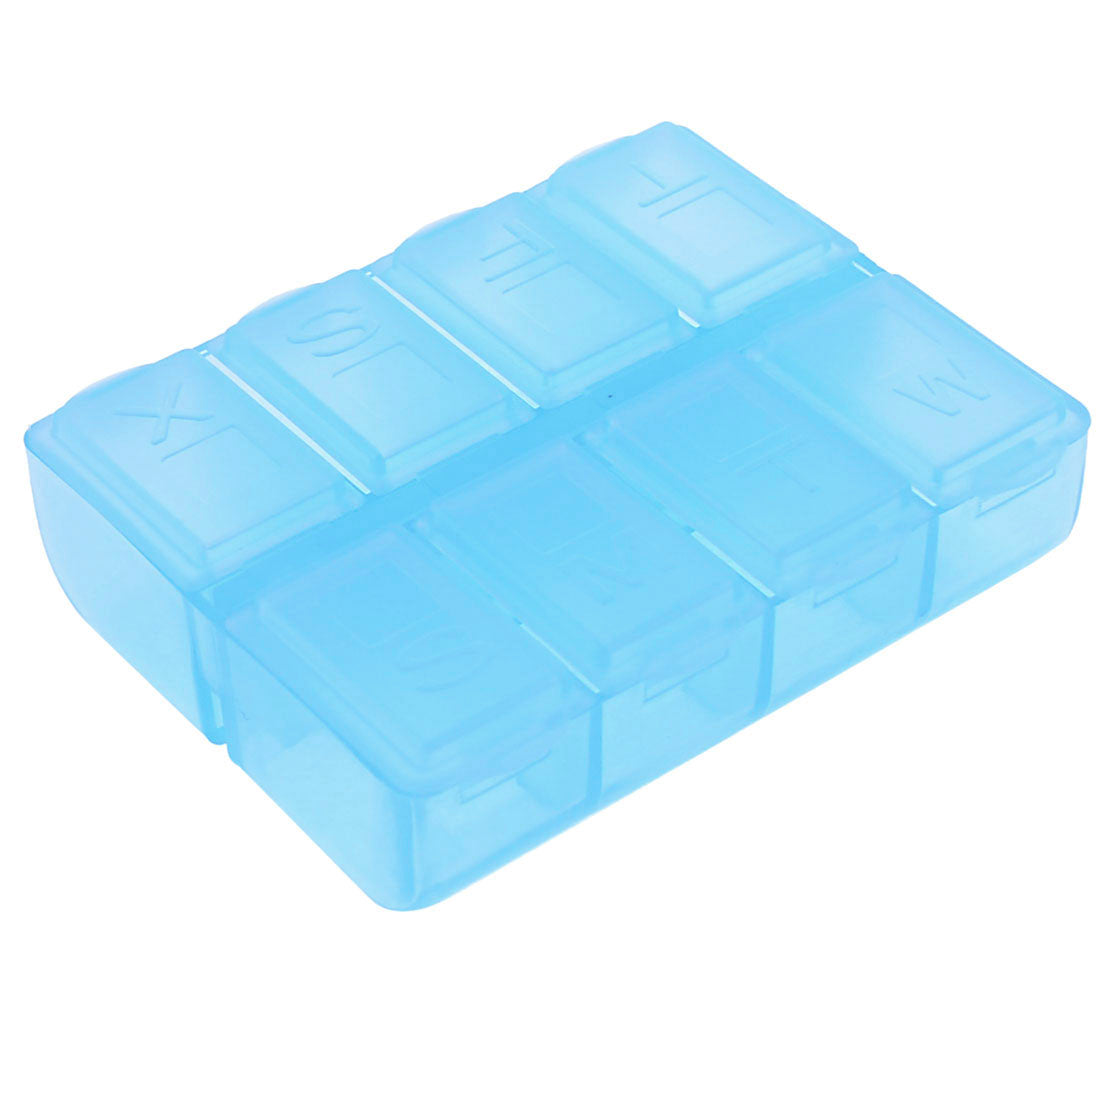 uxcell Uxcell Travel Plastic 8 Compartments Gadget Pill Organizer Box Blue 7.3cm x 5.8cm x 2cm